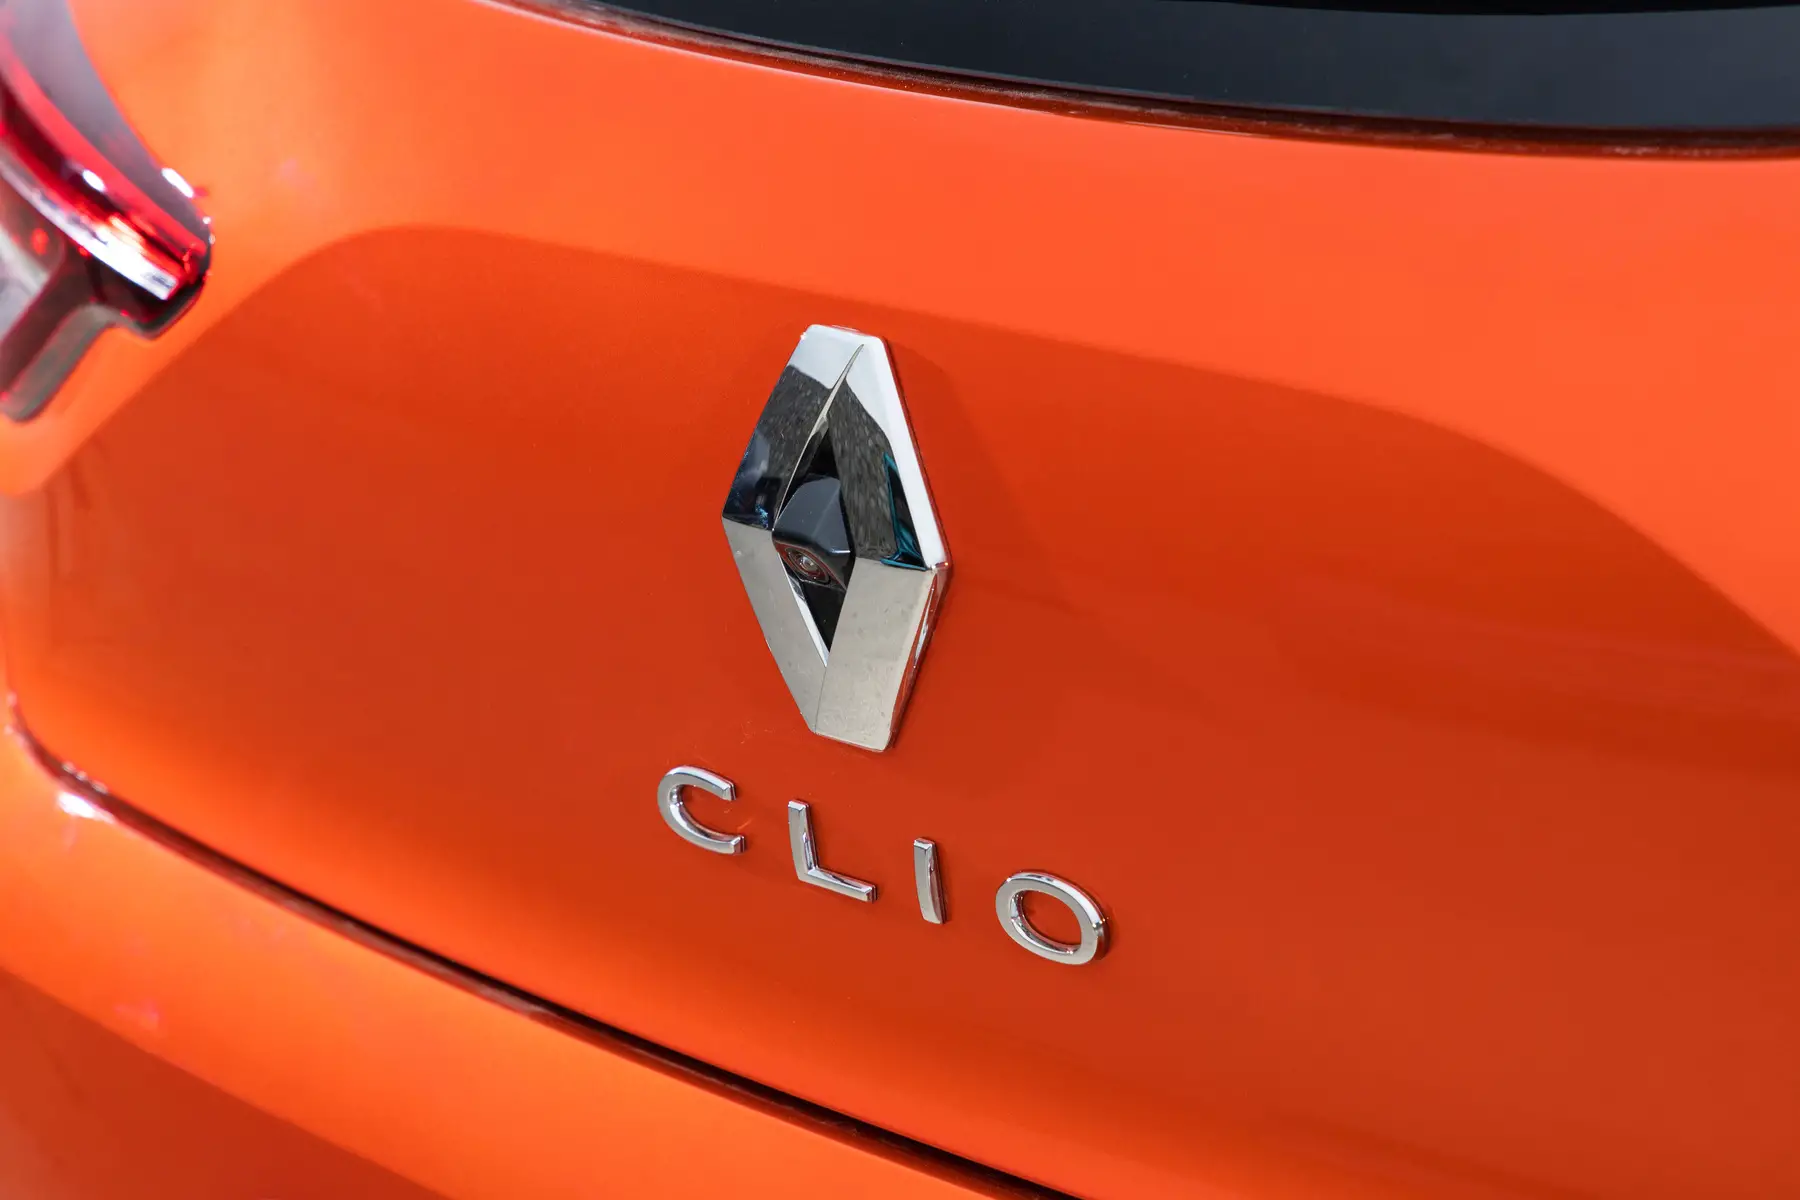 An orange Renault Clio